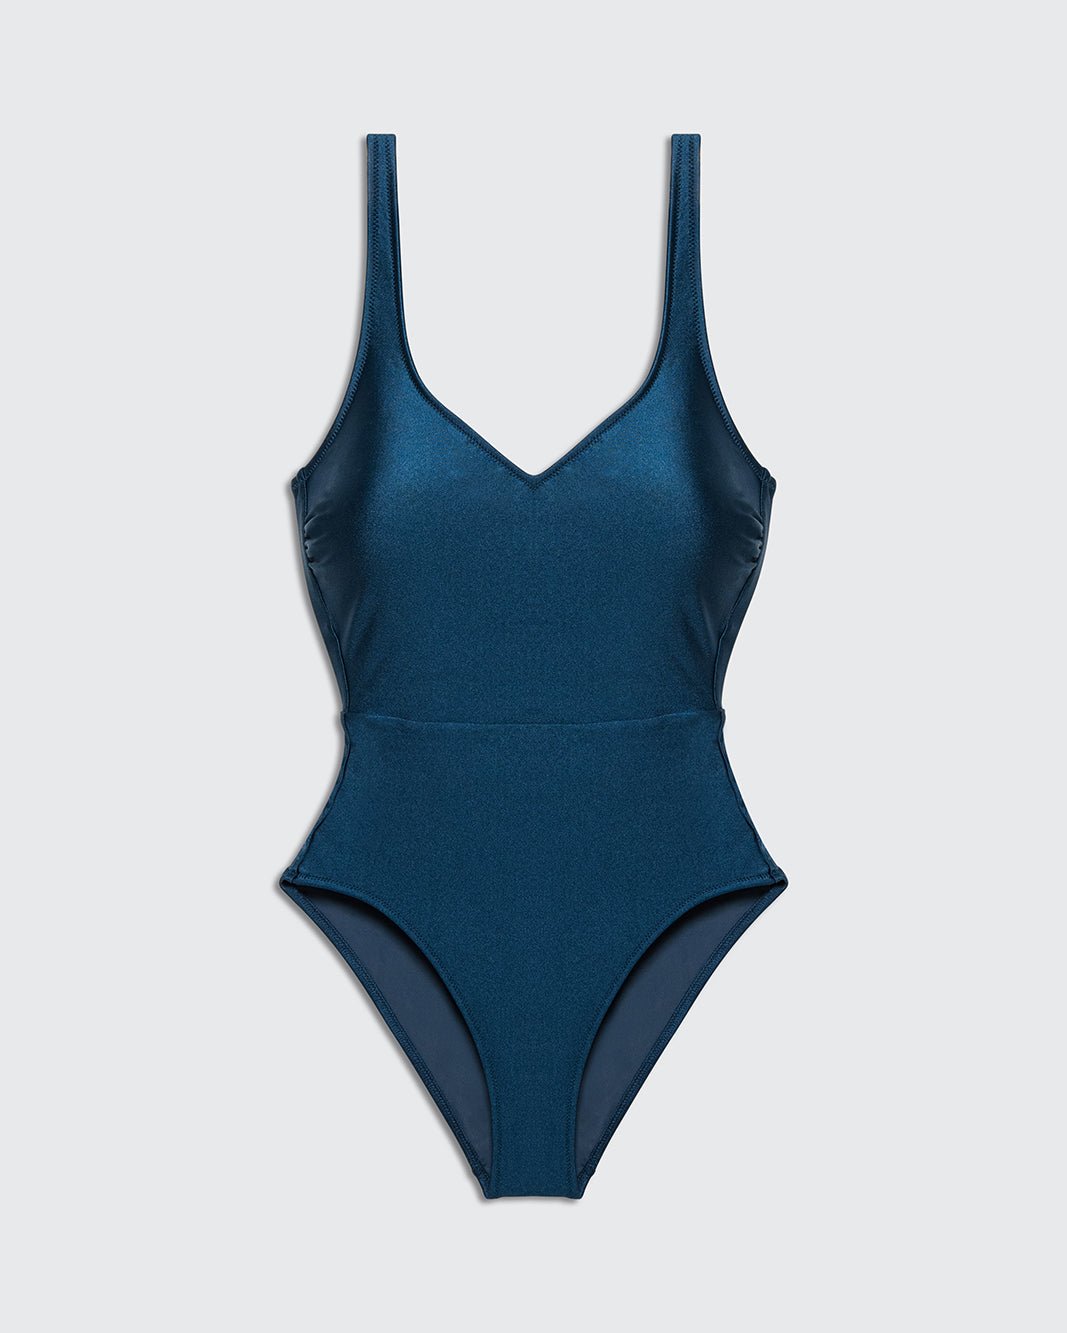 Nile Shiny Blue - one piece -BiliBlond Swimwear